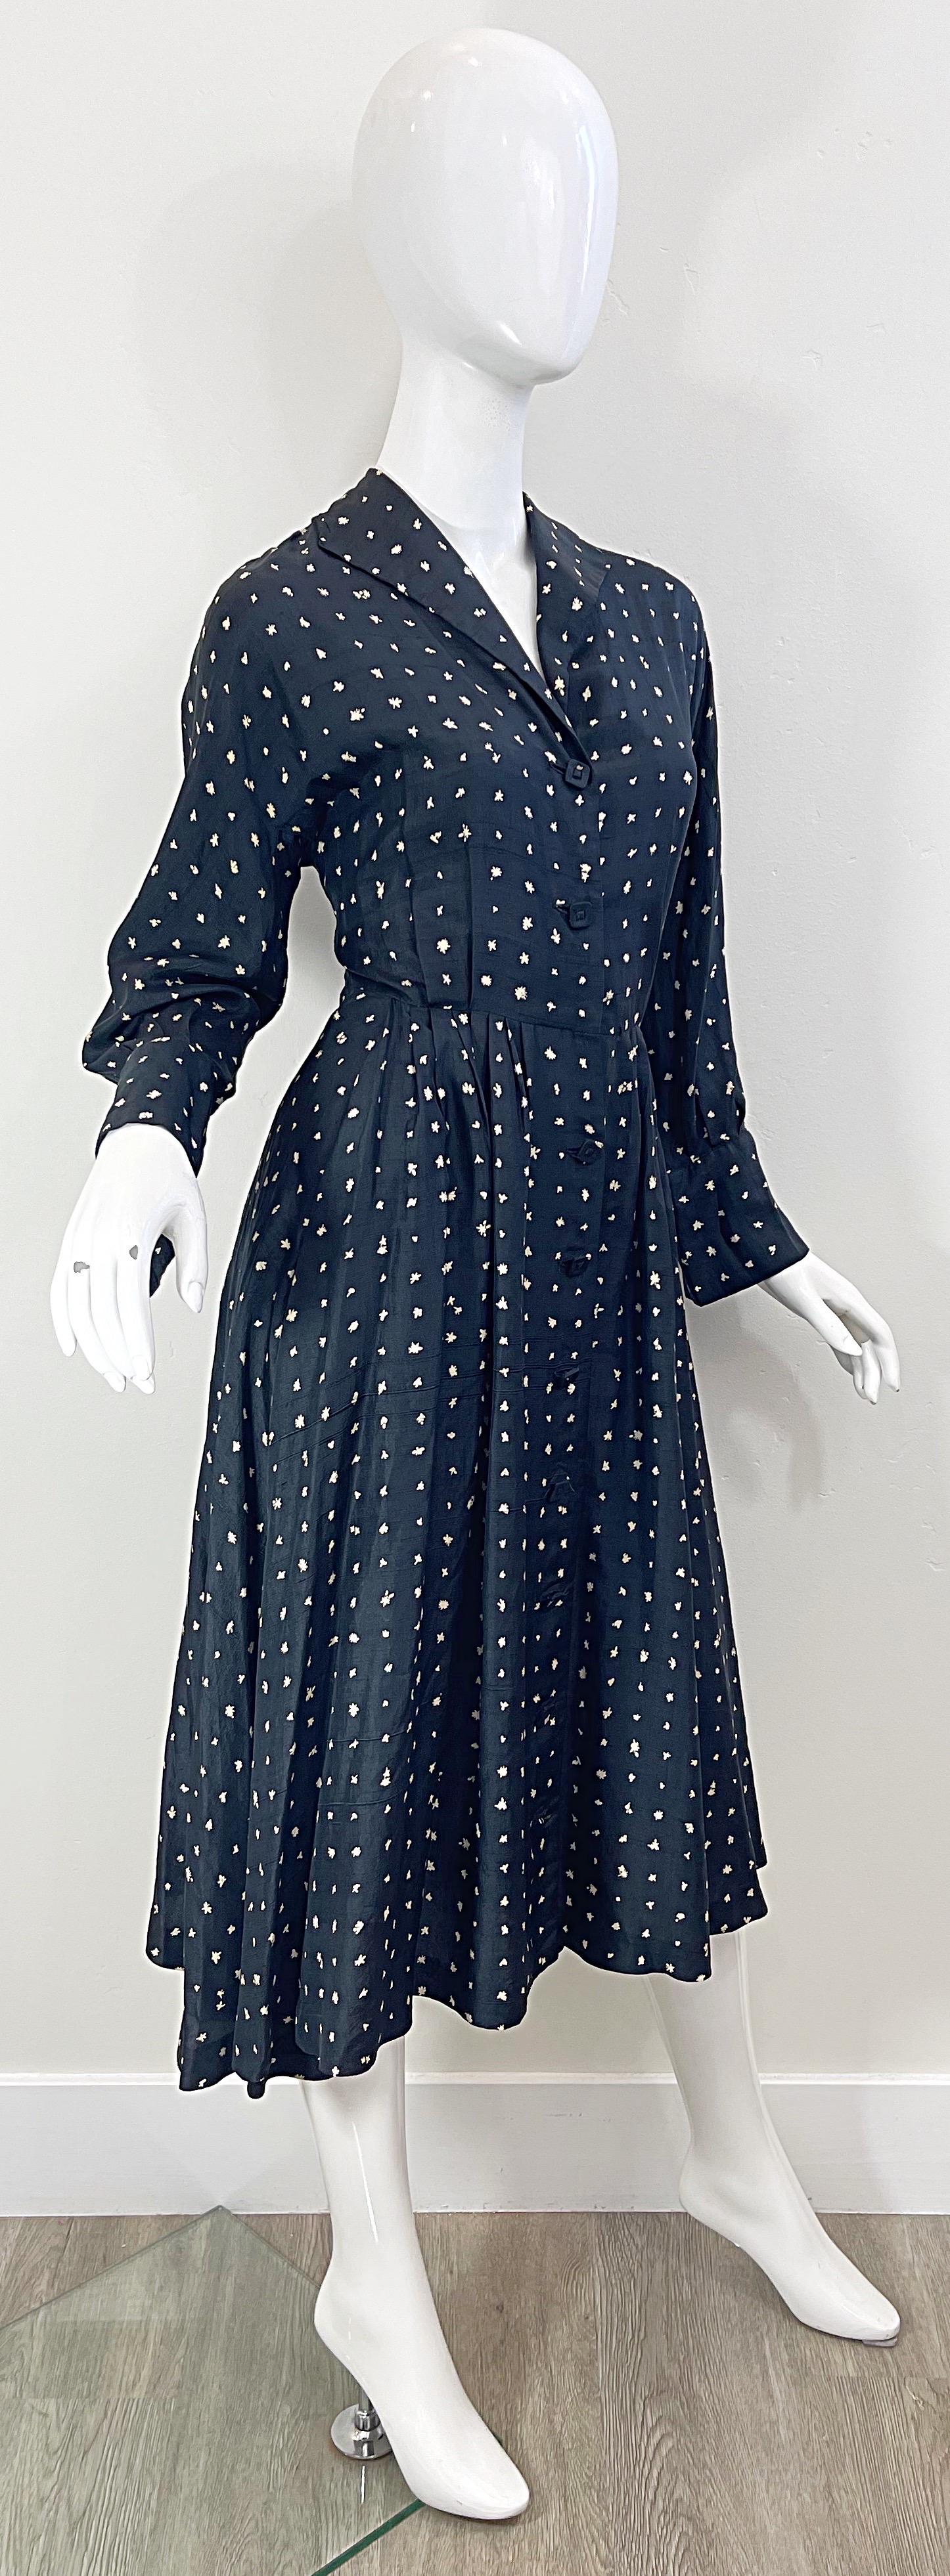 1950s Roberta Lee Originals Black and White Flower Print Vintage 50s Dress For Sale 5